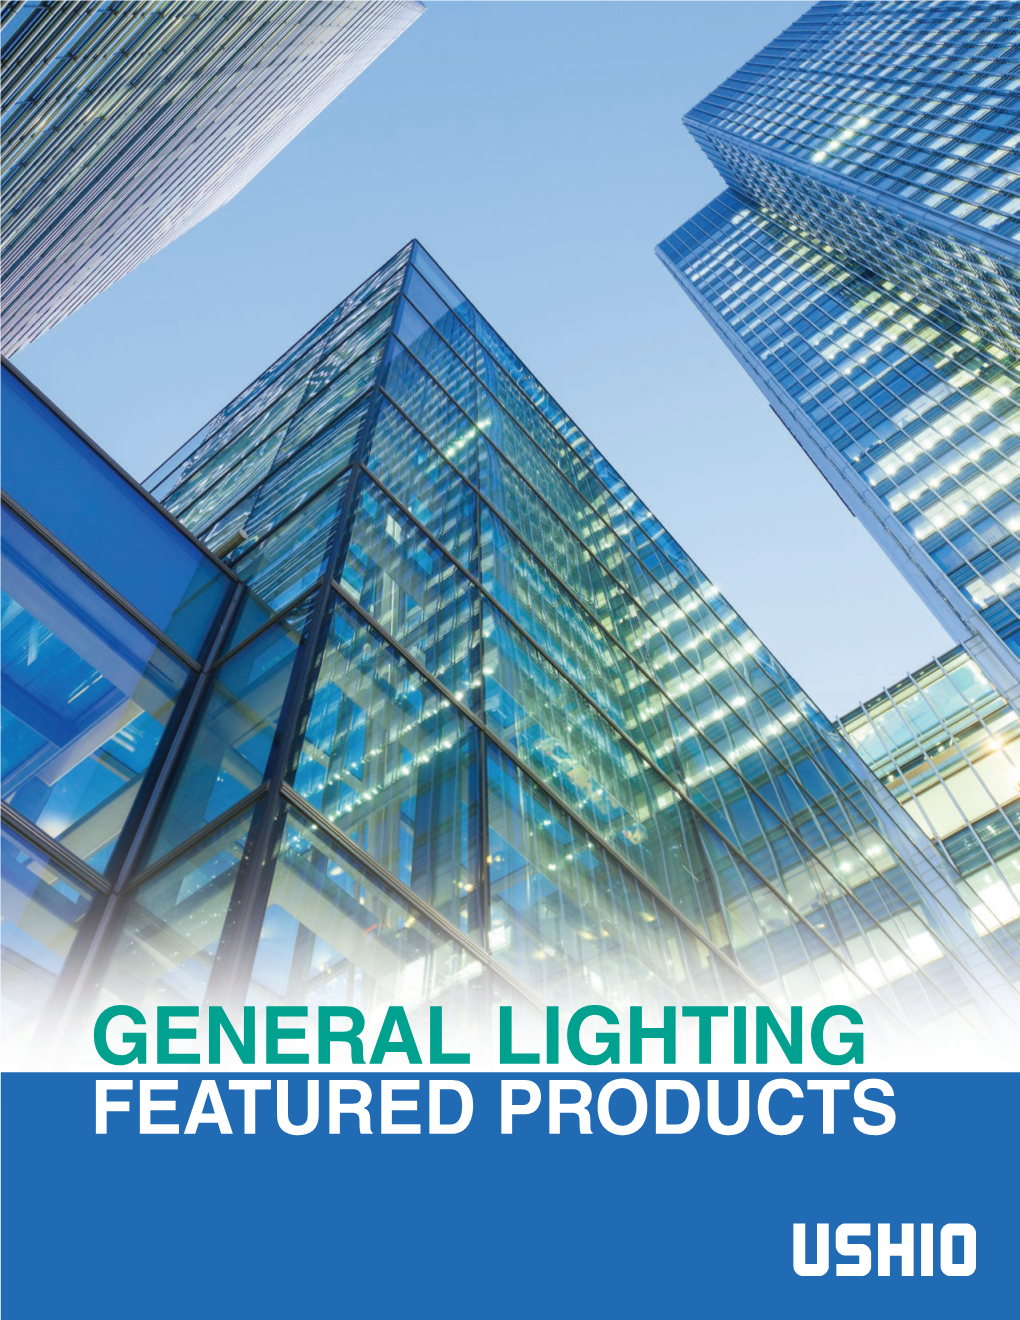 GENERAL LIGHTING FEATURED PRODUCTS MR16 - LED UPHORIA™ EDGE LED MR16 (95+ CRI) USHIO Introduces New 95+ CRI LED MR16 Lamps to Its Uphoria™ Edge Series